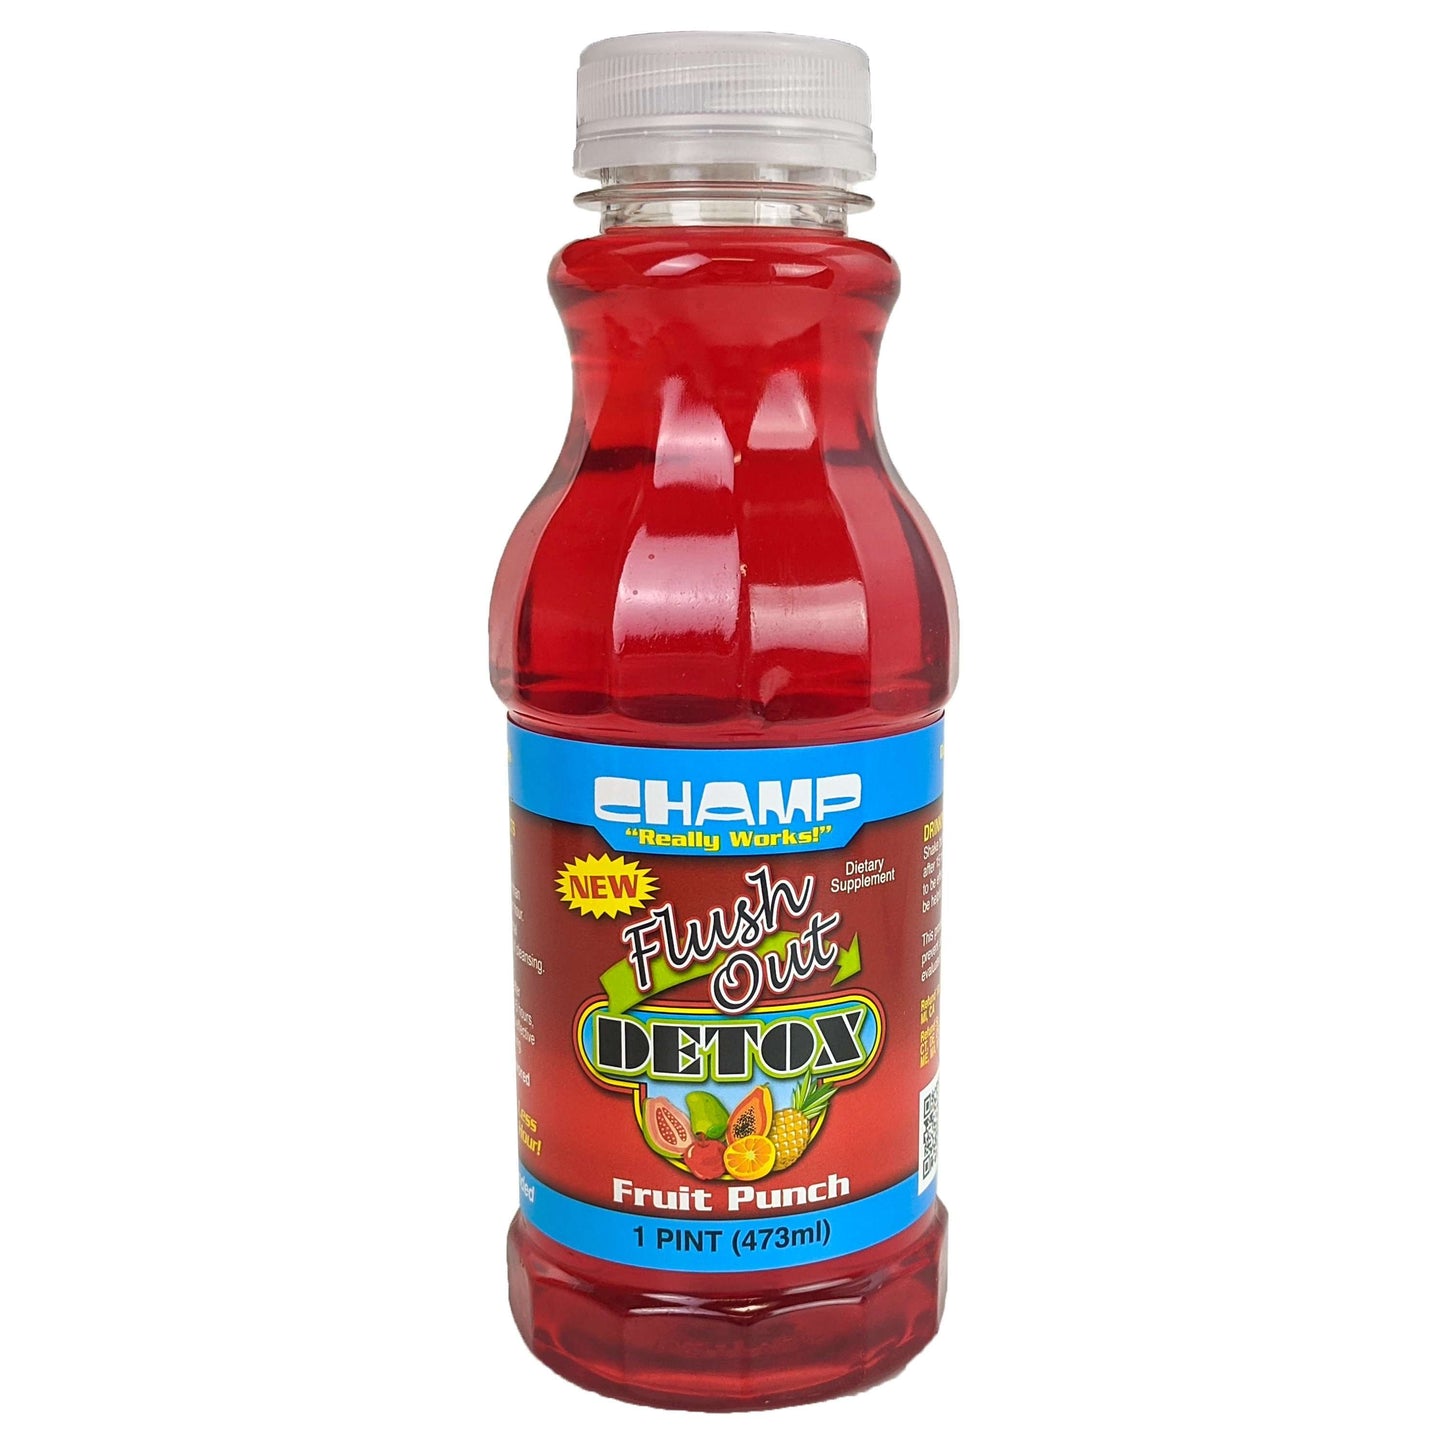 Champ Flush Out Detox Drink 1 Pint/473ml, Fruit Punch Flavor